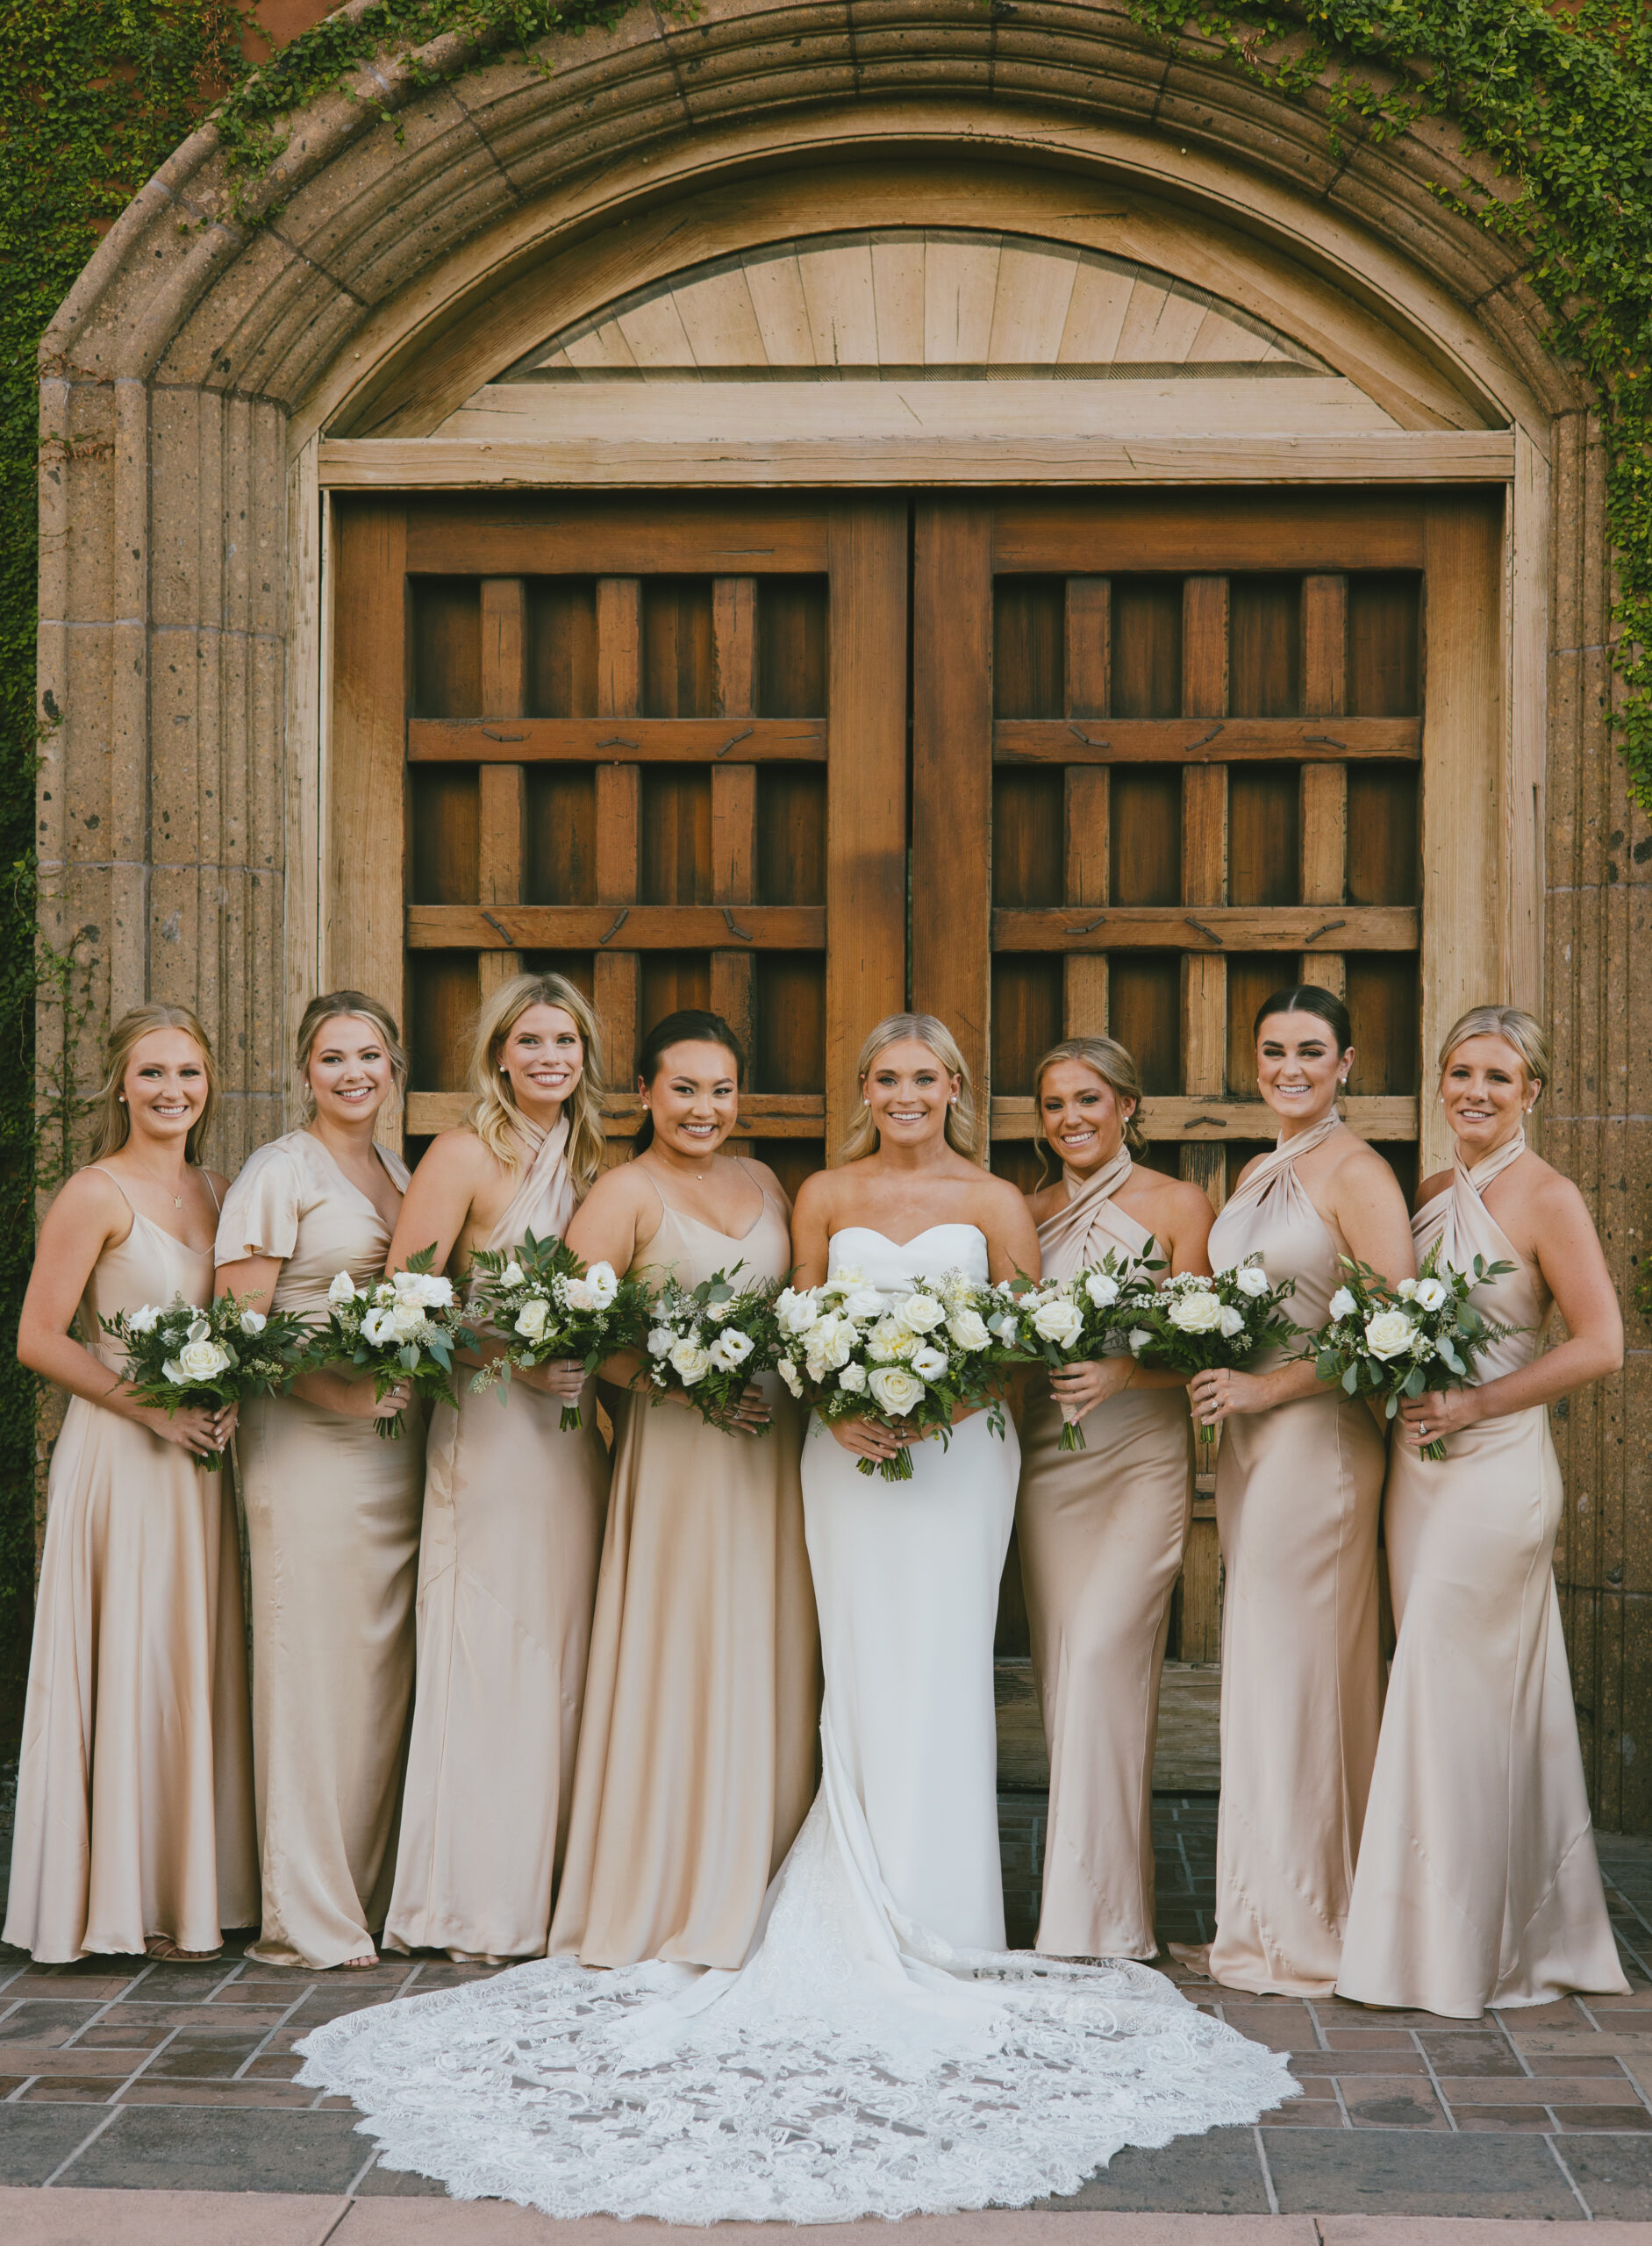 Professional bride Alexa and bridesmaids wedding photographer in Arizona